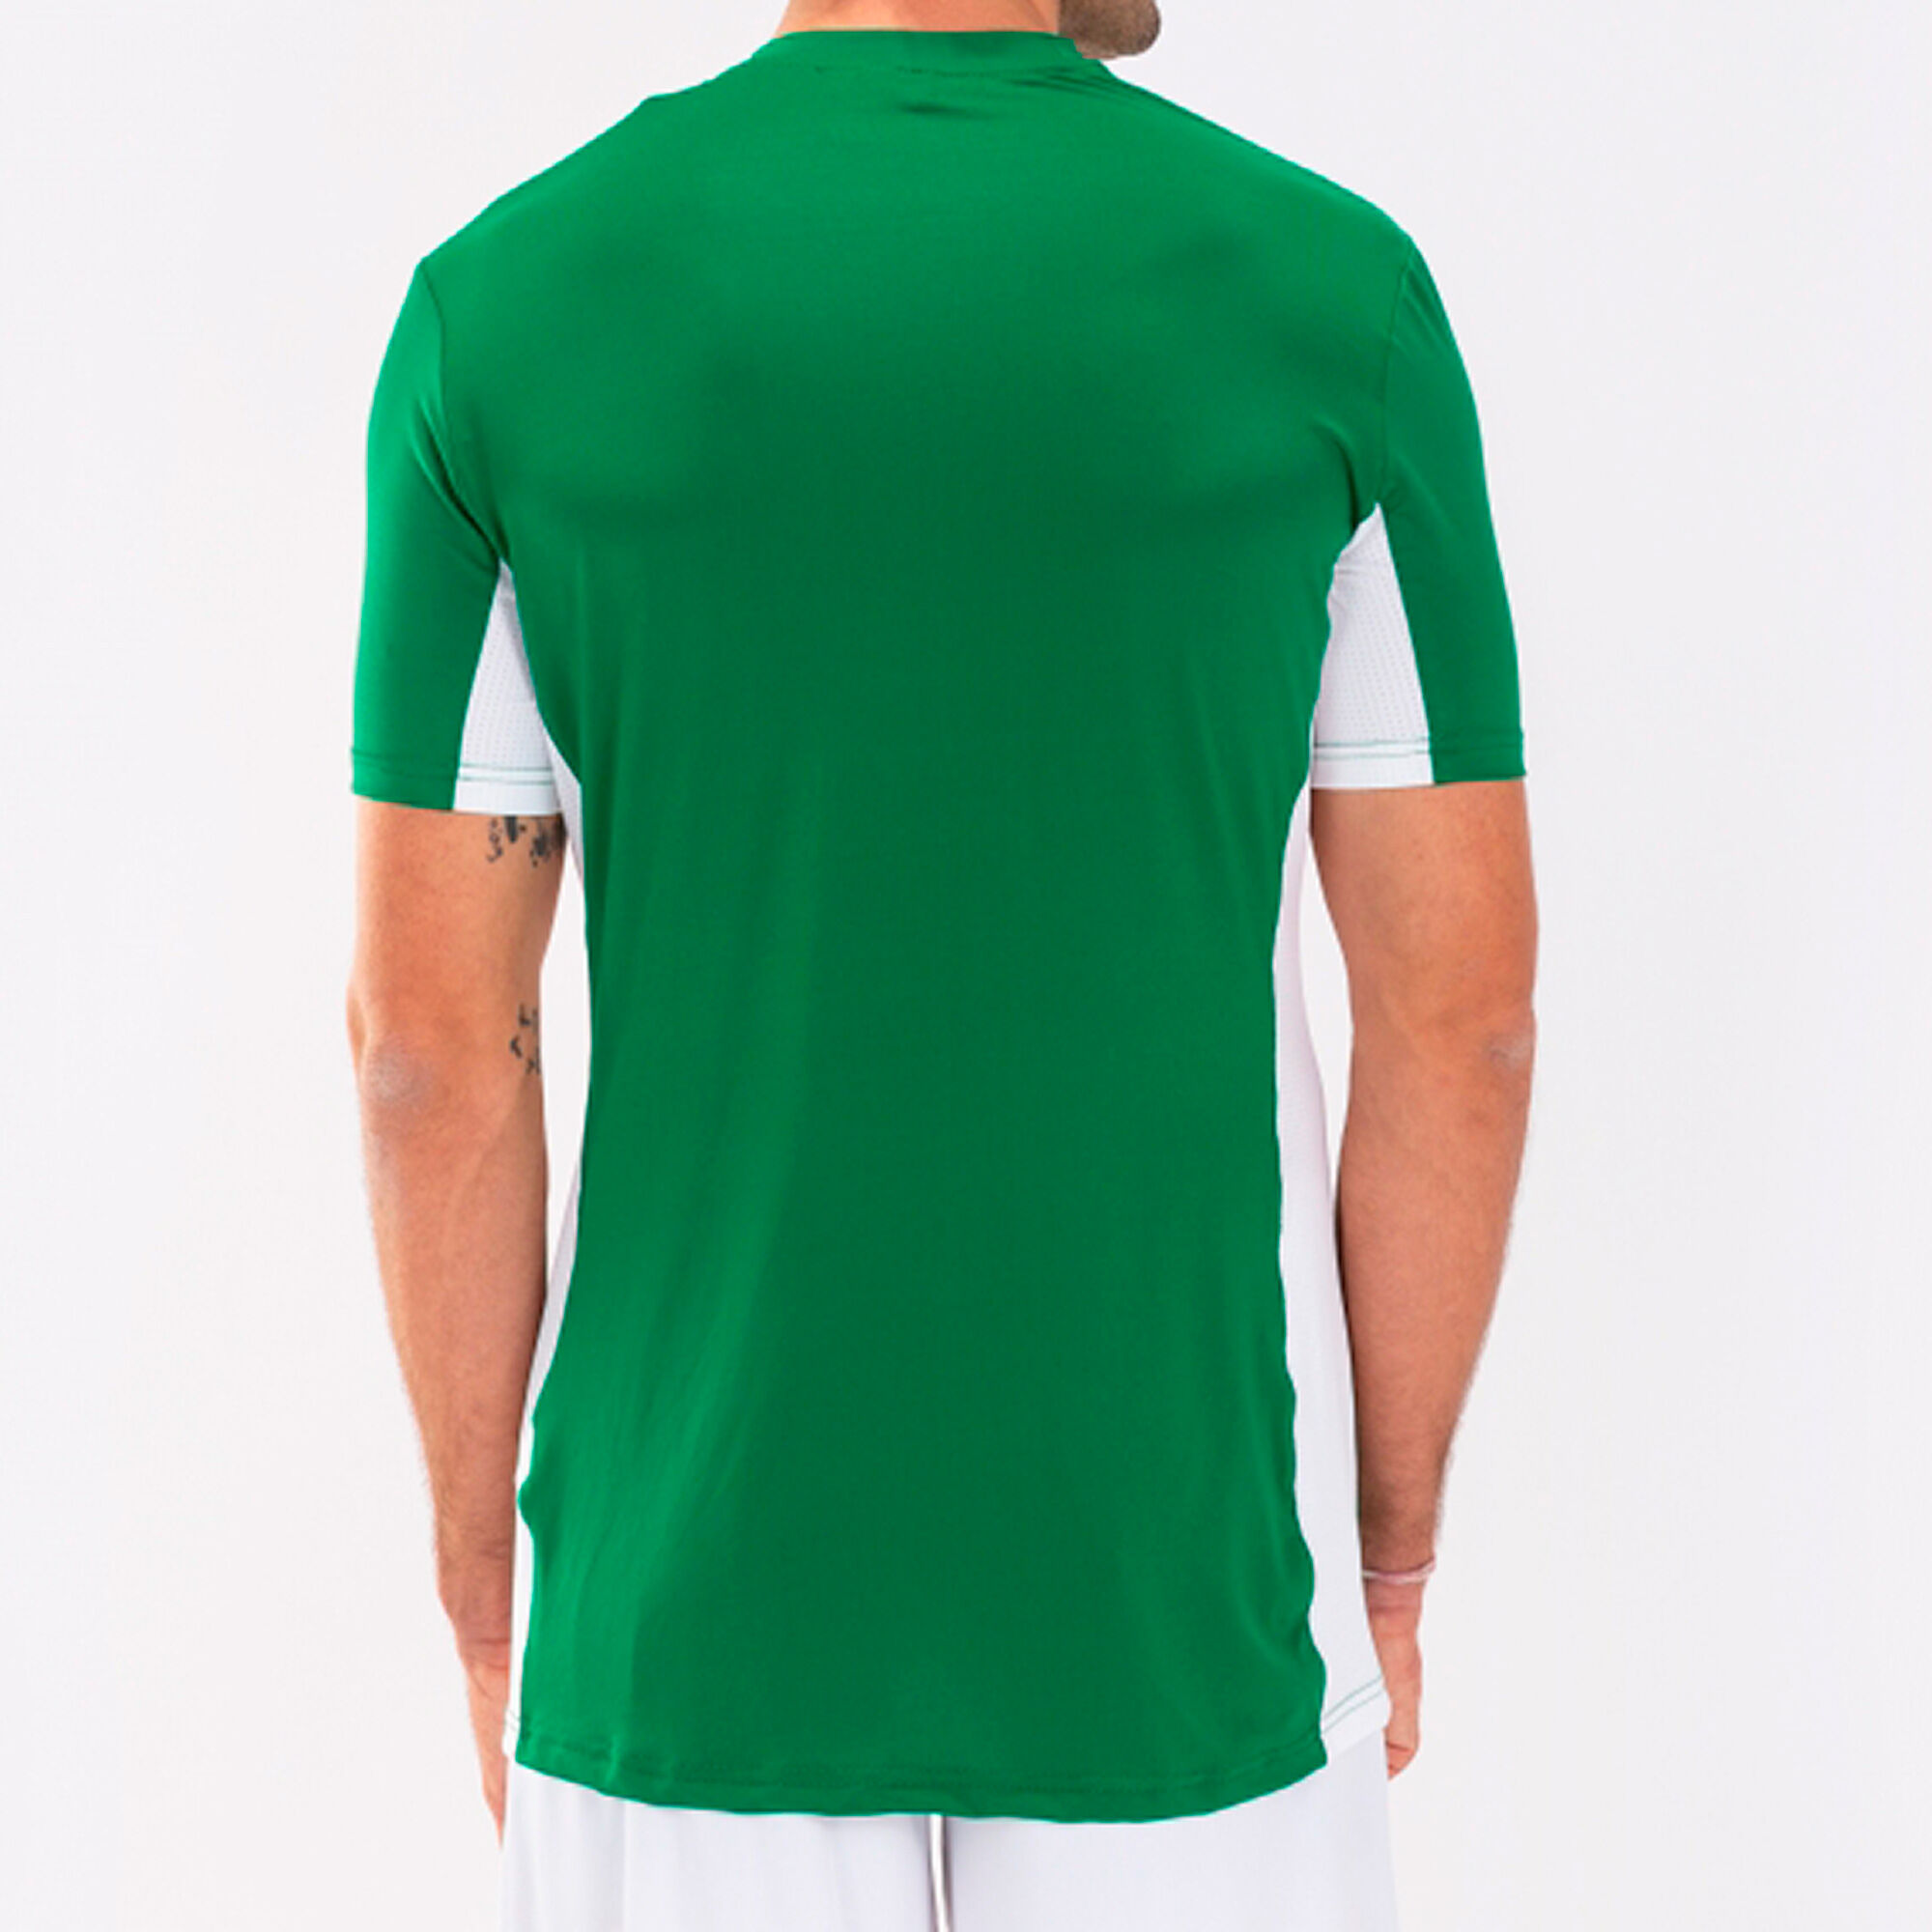 Camiseta manga corta hombre Superliga verde blanco